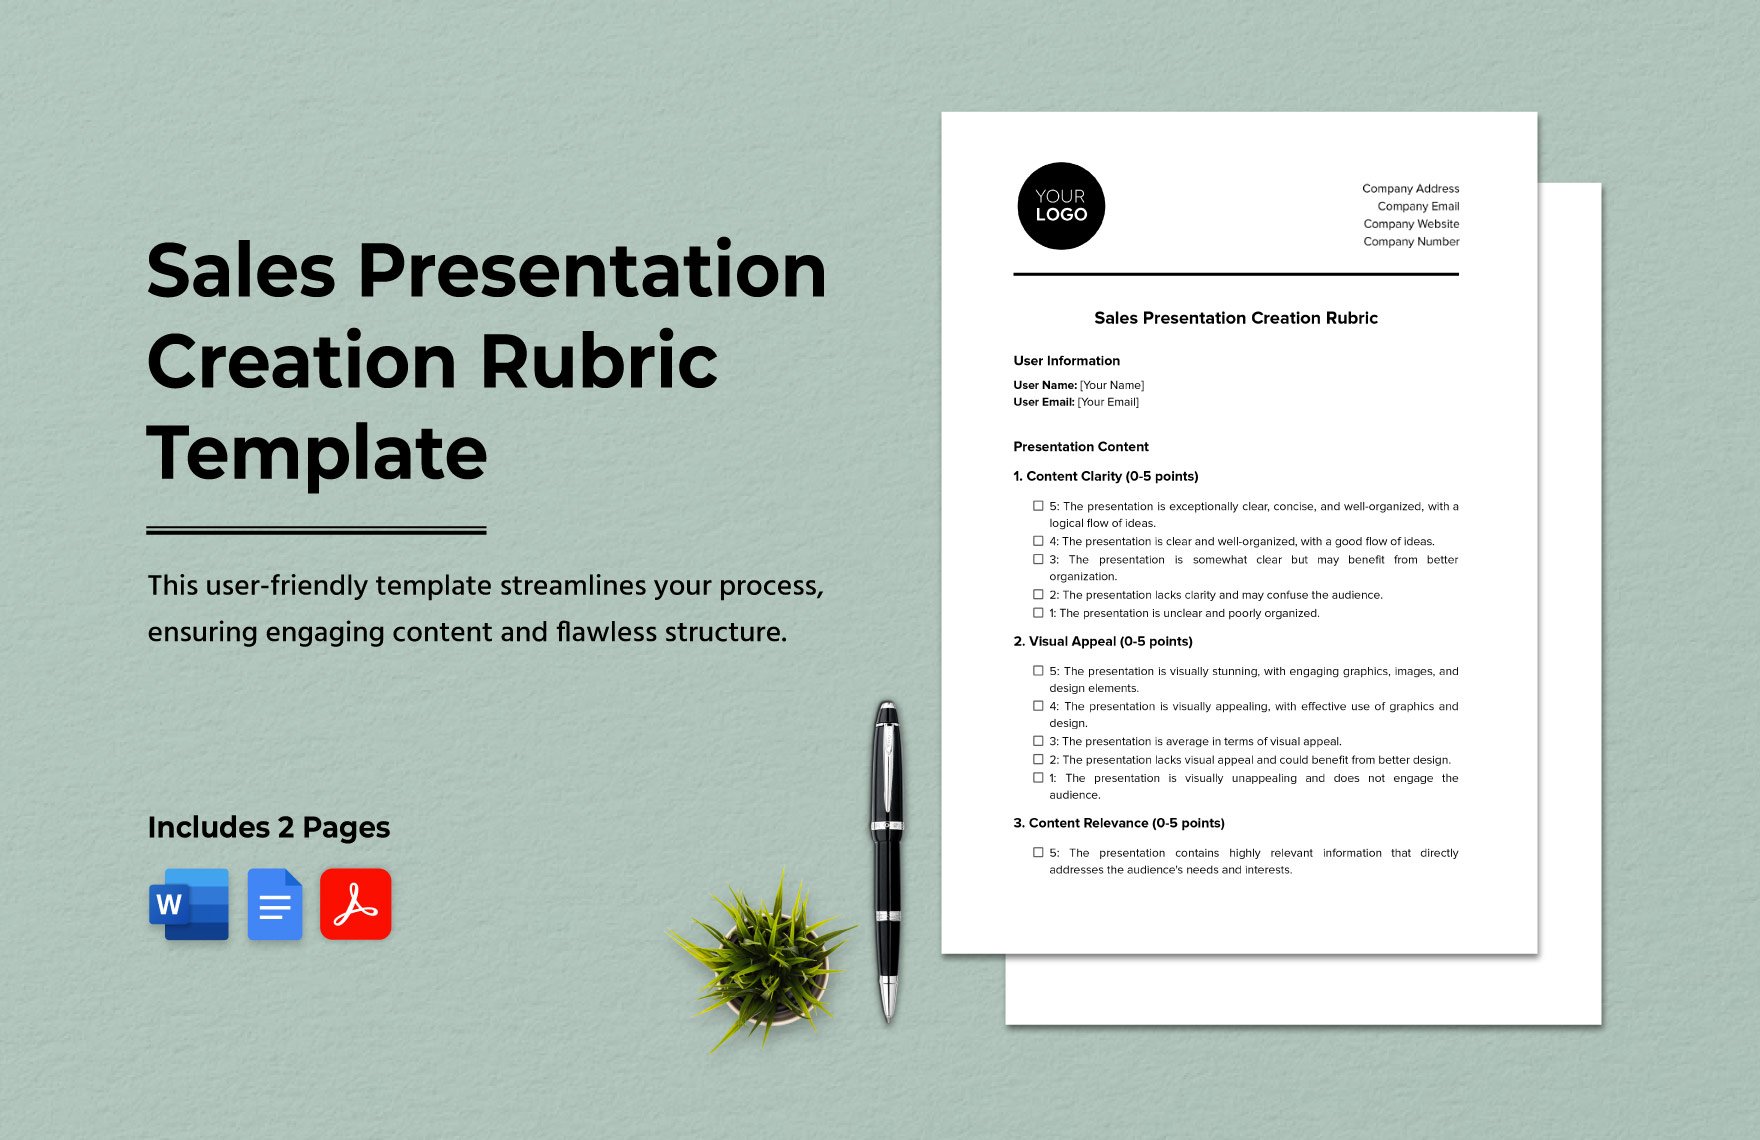 Sales Presentation Creation Rubric Template